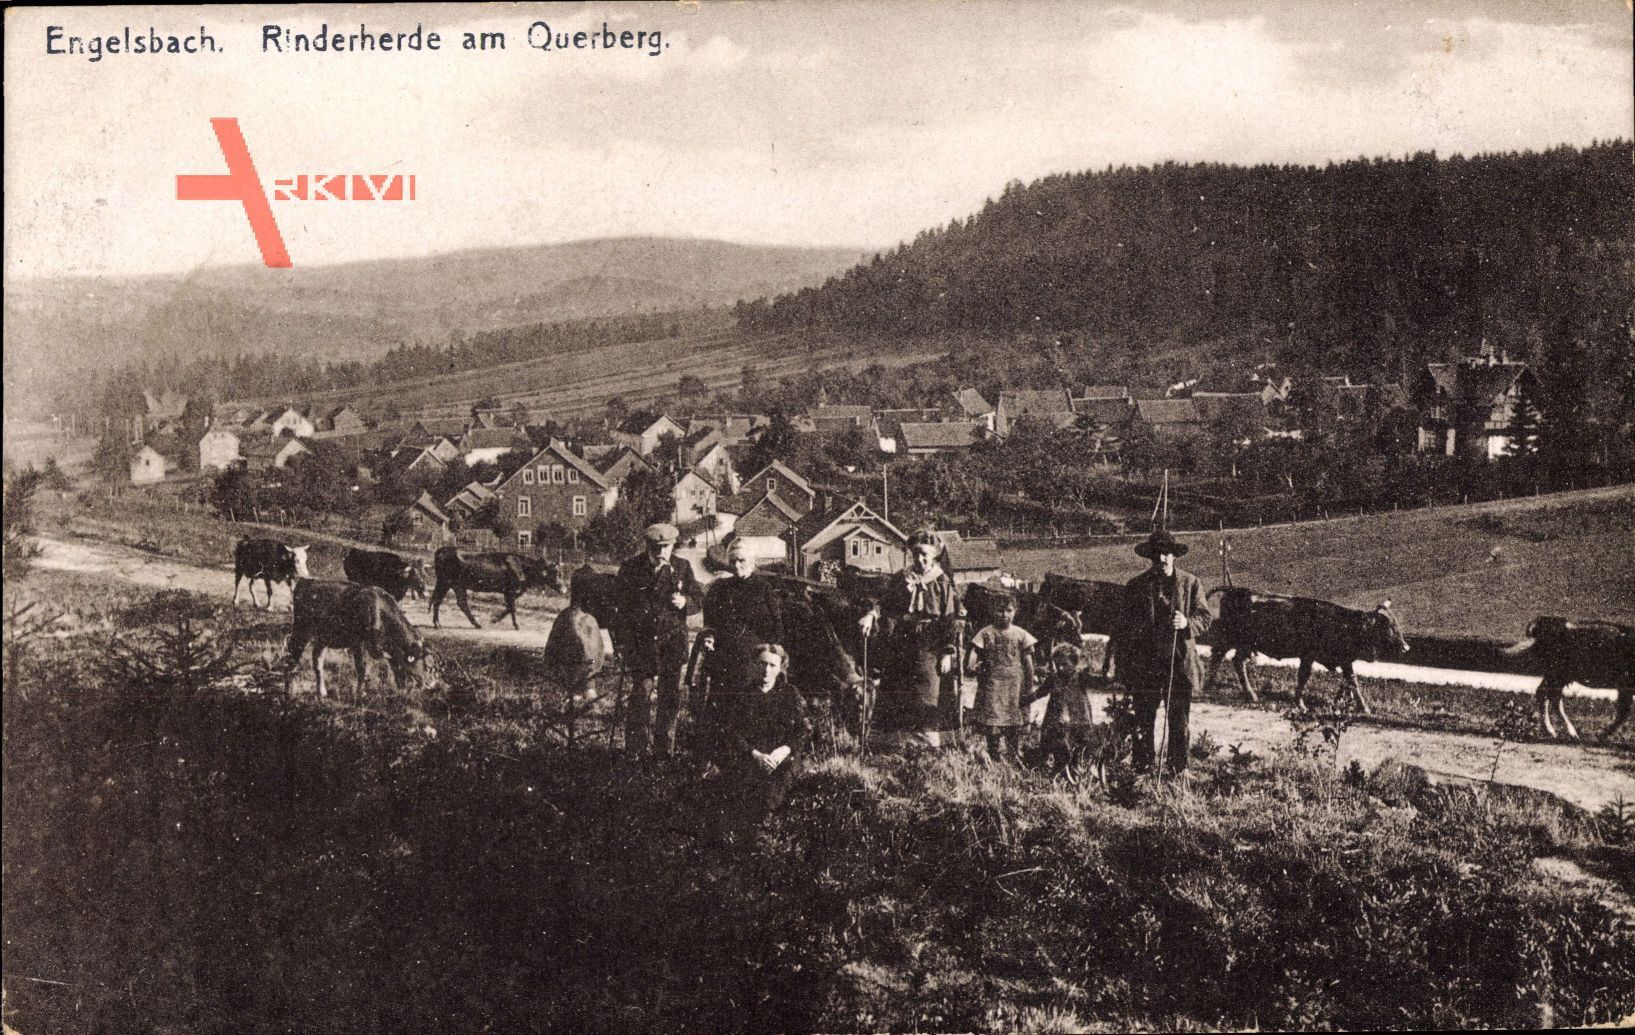 Engelsbach, Rinderherde am Querberg, Bauer, Familie, Häuser, Wald